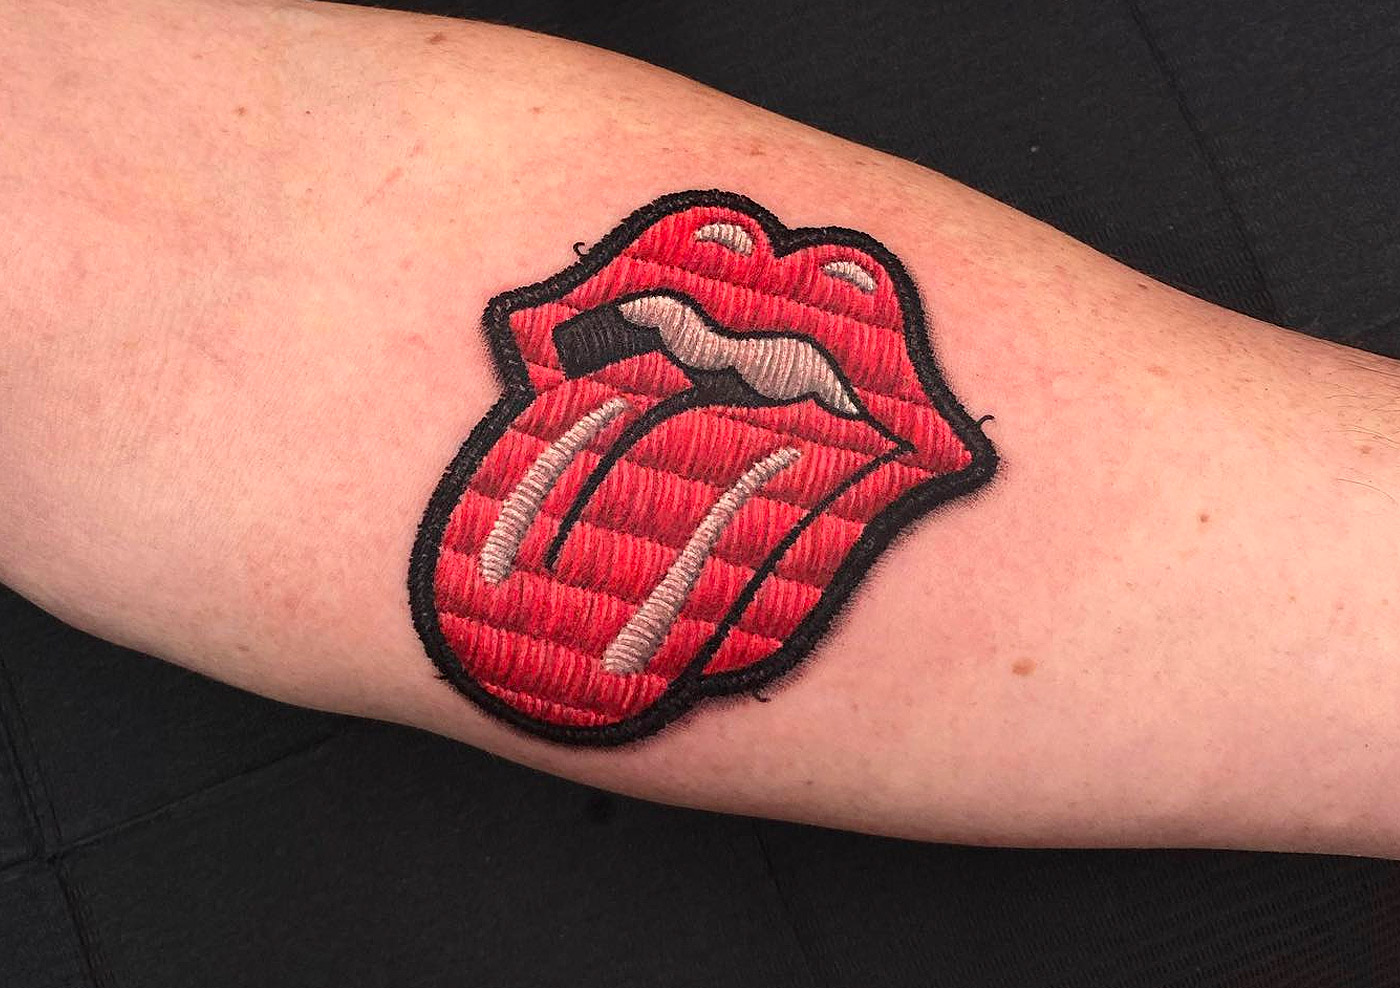 Yeyo Tattoos on Instagram Keith Richards fully healed Tattooing at  inknationstudio NYC  Ready for nyempirestatetattooexpo Done with  cheyennetattooequipment